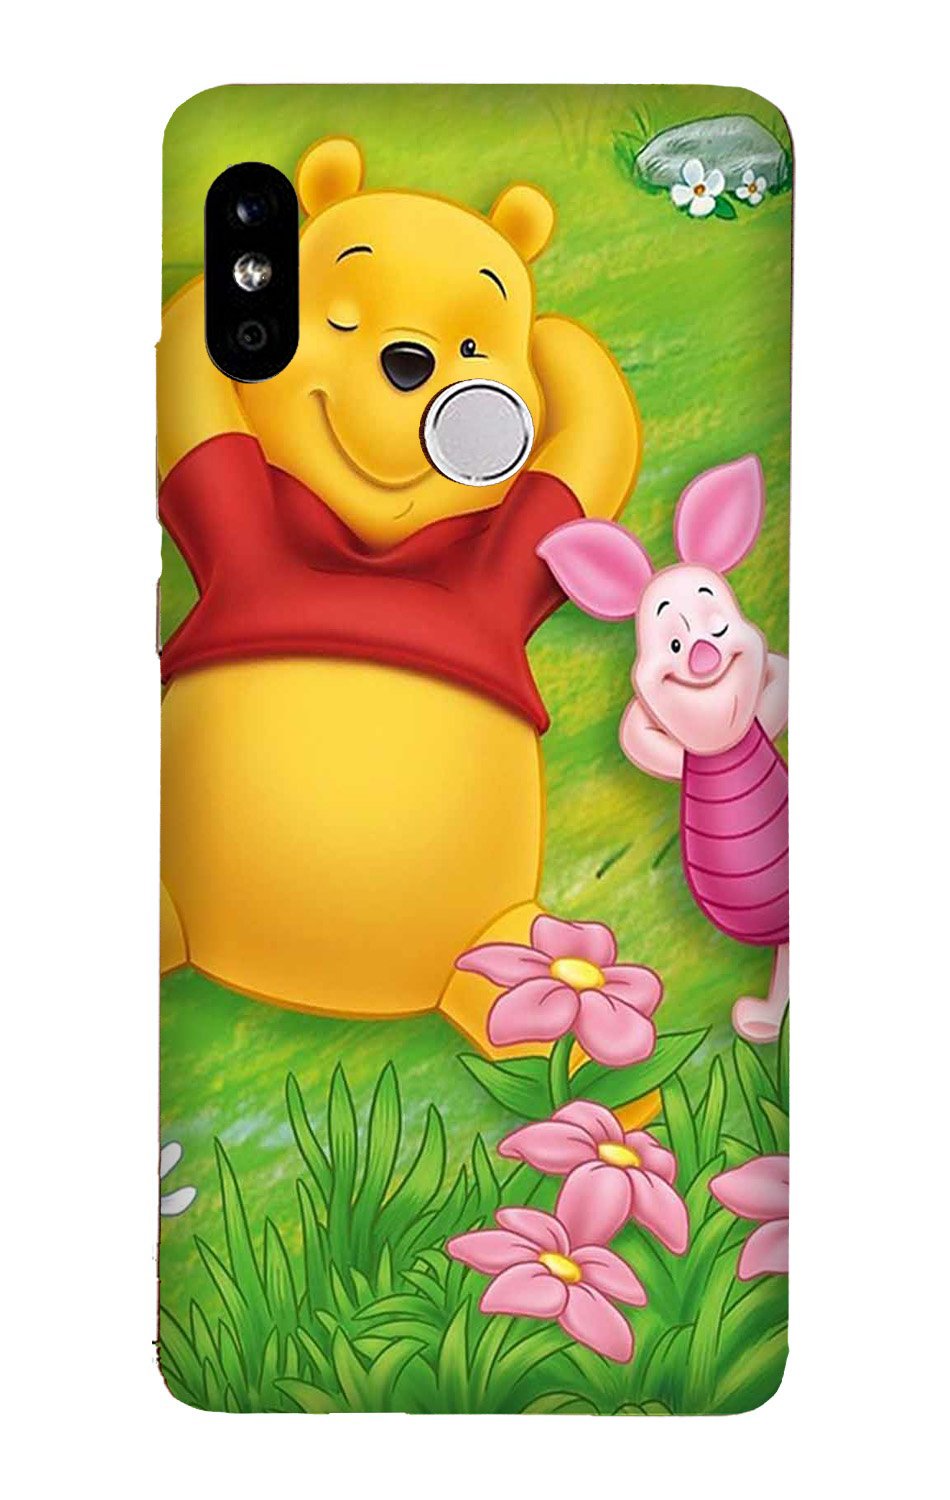 Winnie The Pooh Mobile Back Case for Redmi Note 5 Pro  (Design - 348)